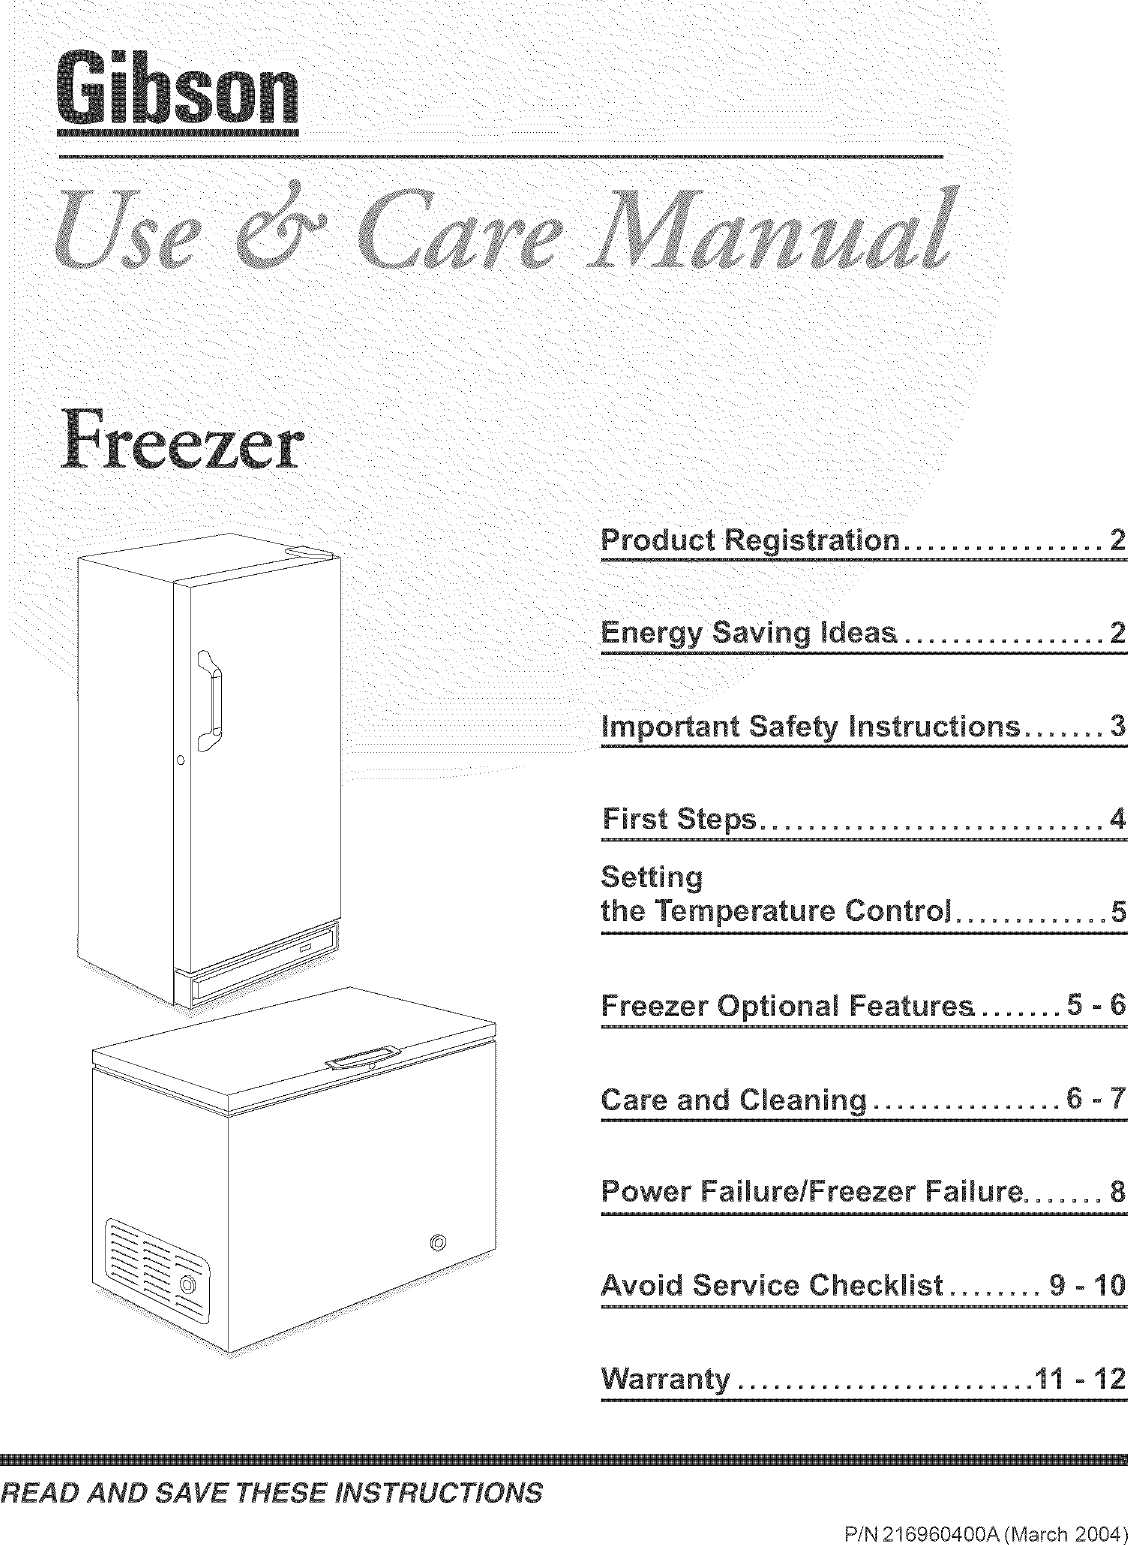 GIBSON Upright Freezer Manual L0411337